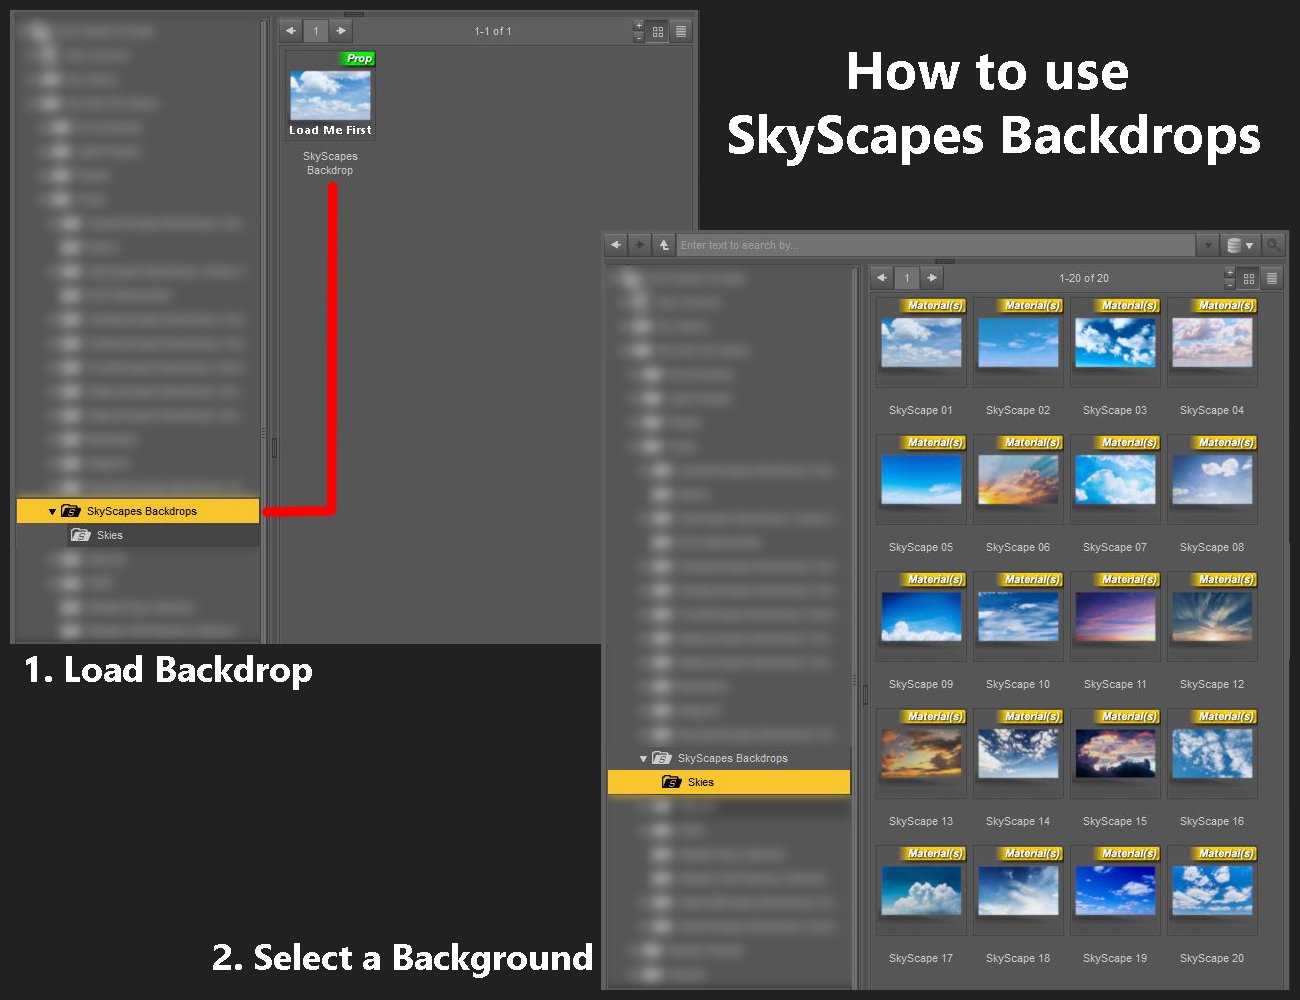 SkyScapes Backdrops by: Illumination, 3D Models by Daz 3D